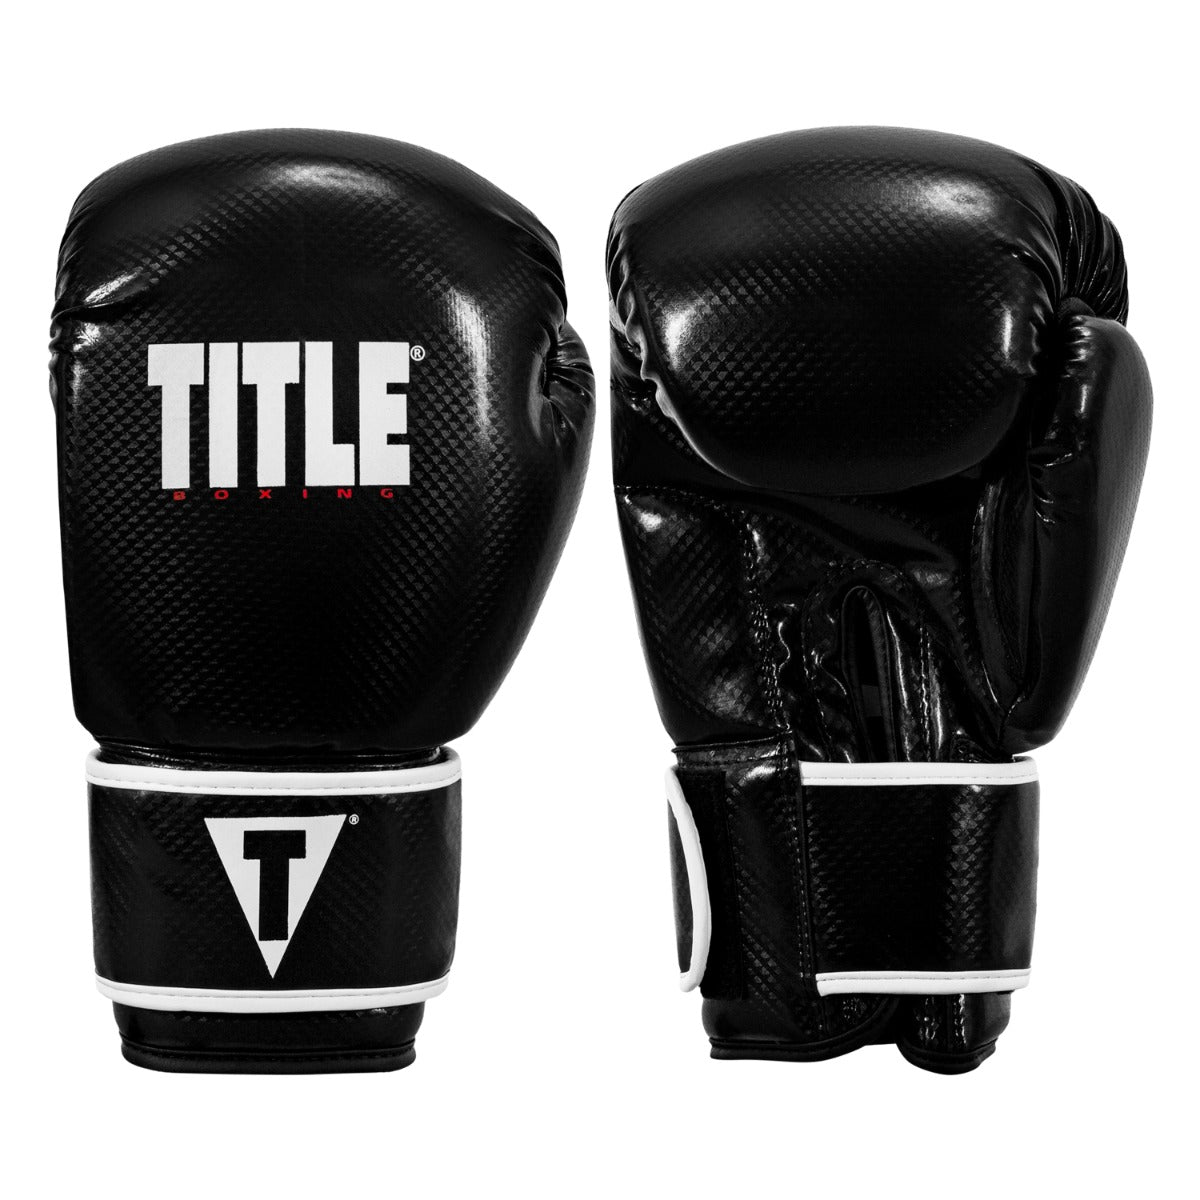 TITLE Instinct Fitness Boxing Gloves